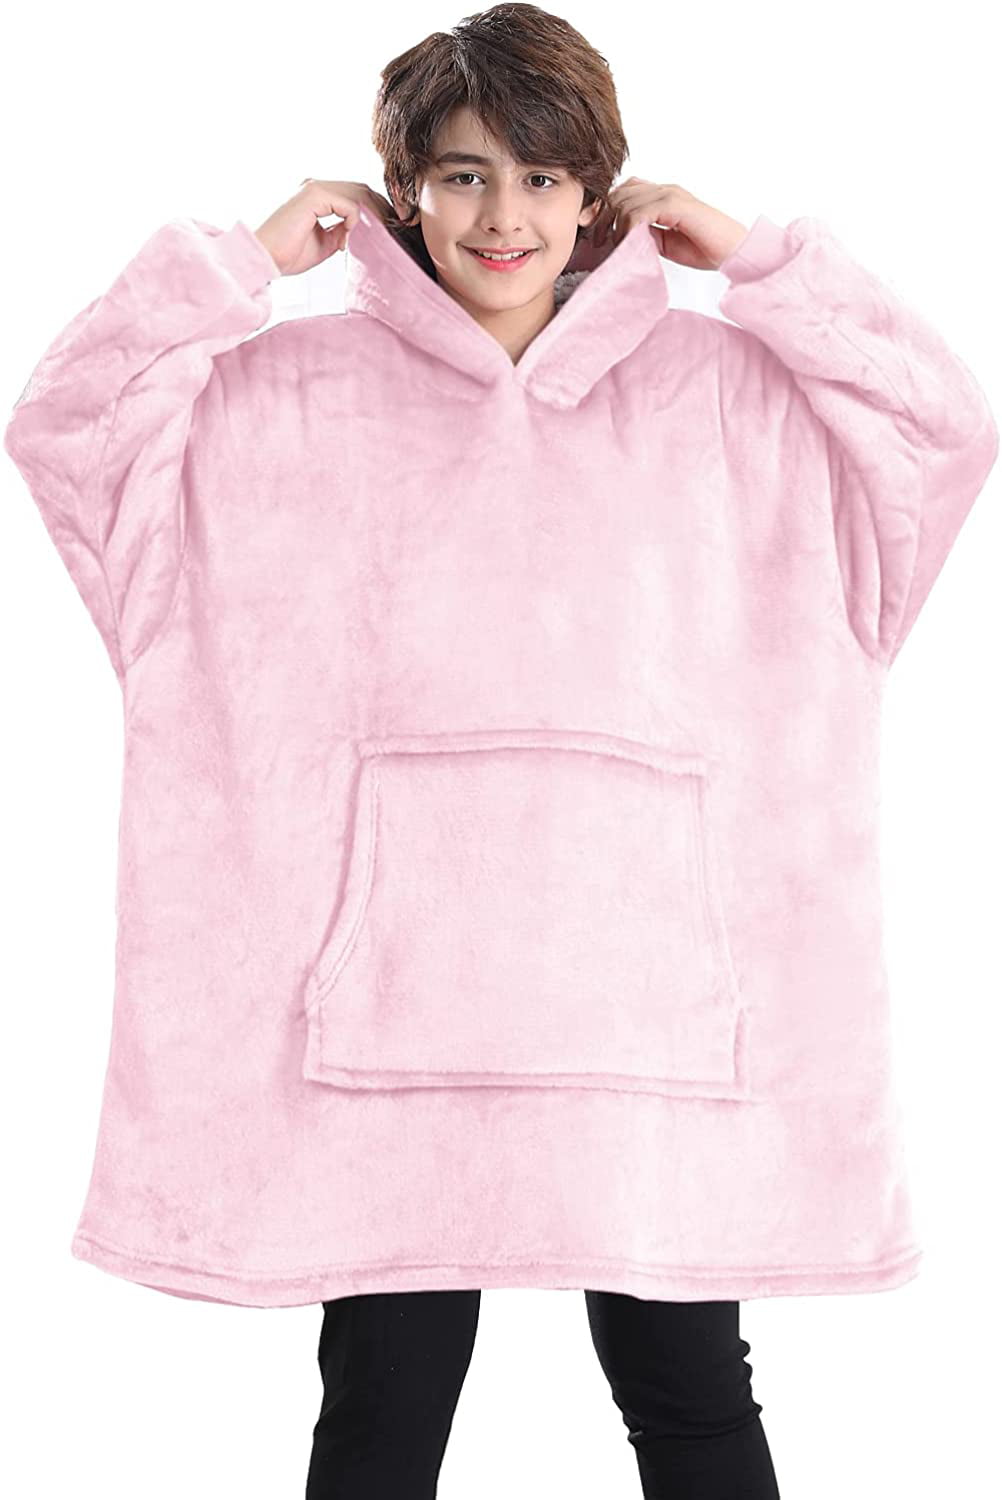 Oversized Hoodie Sweatshirt Blanket Super Soft Fleece Dressing Gown Warm Comfortable Hooded Robe Blanket Hoodie for Kids Gifts for Gamers Boys Girls Teens